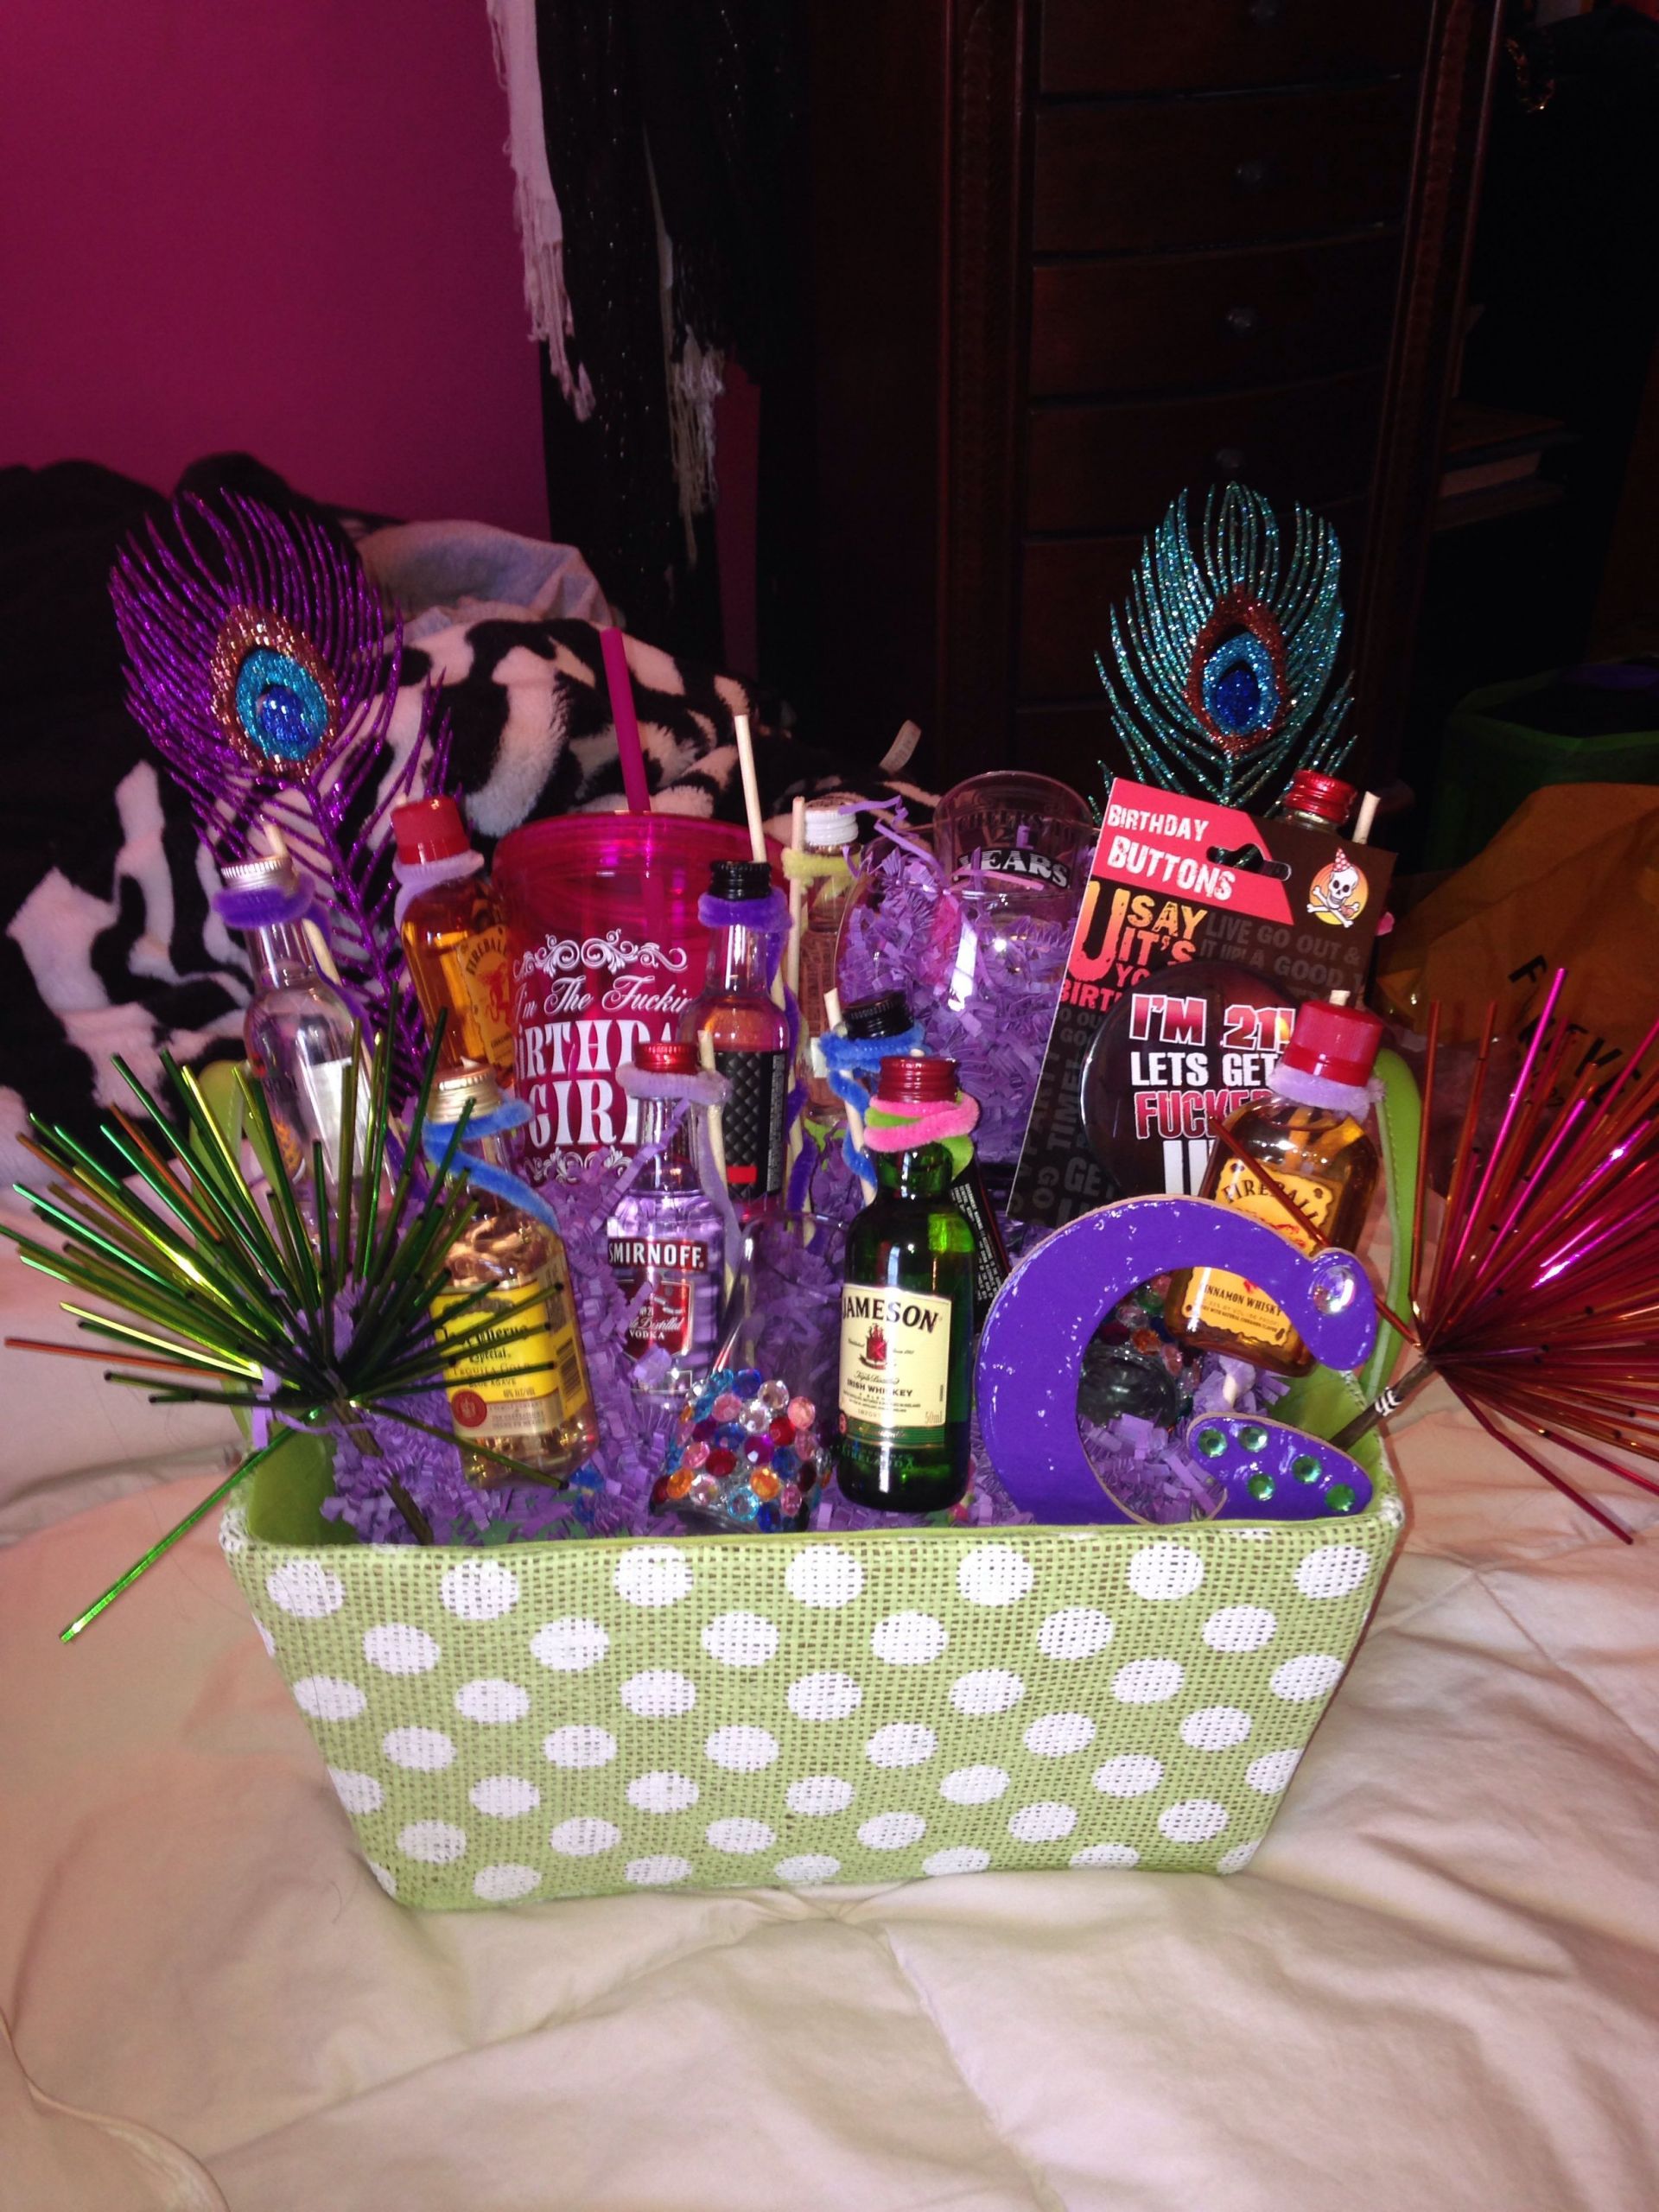 21st Birthday Gift Baskets For Her
 75 Diy 21st Birthday Gift Ideas